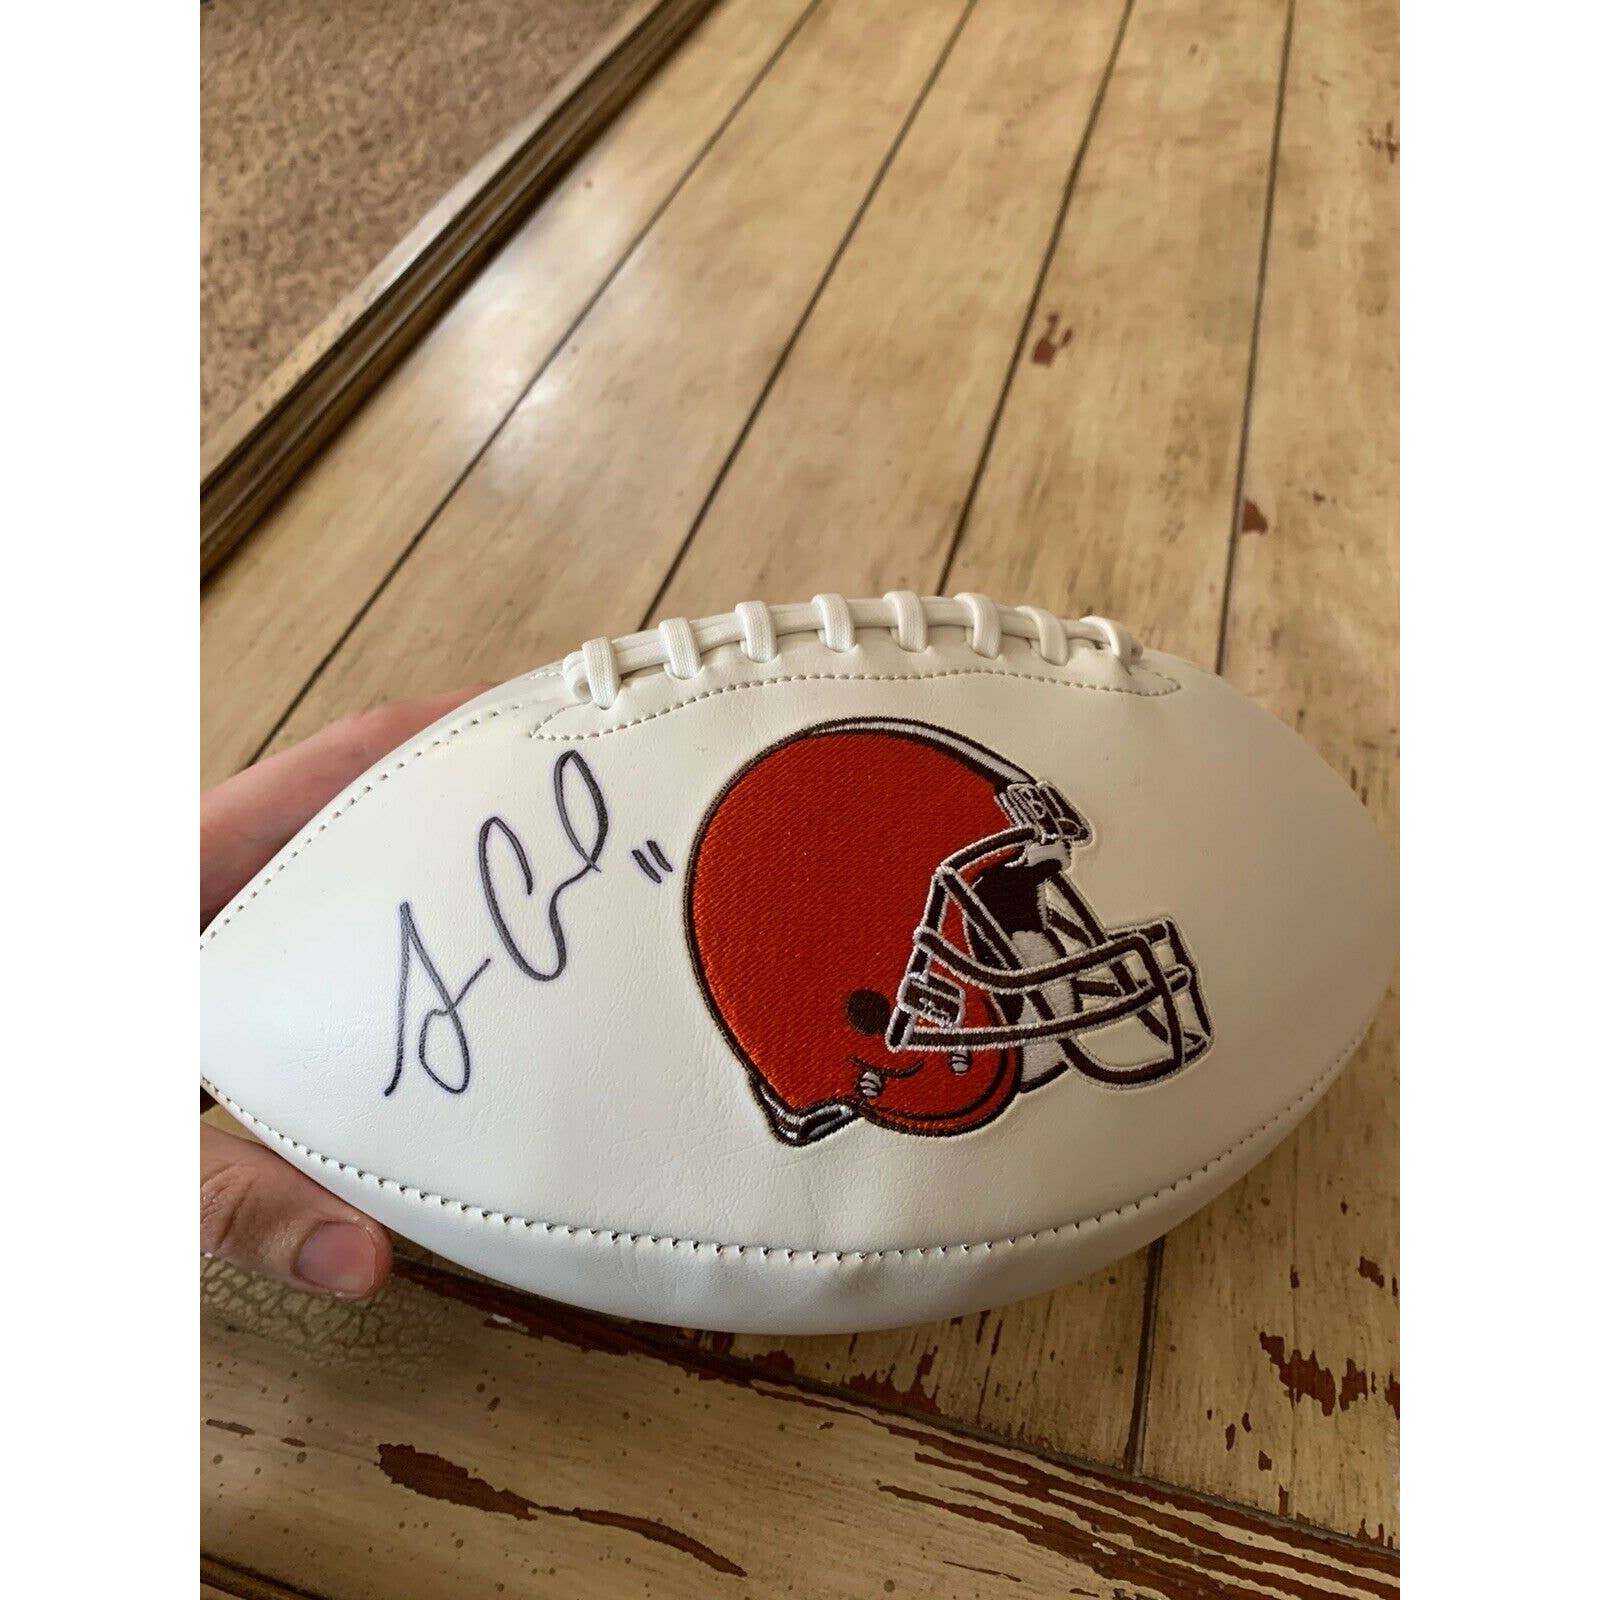 Antonio Callaway Autographed/Signed Football JSA COA Cleveland Browns - TreasuresEvolved